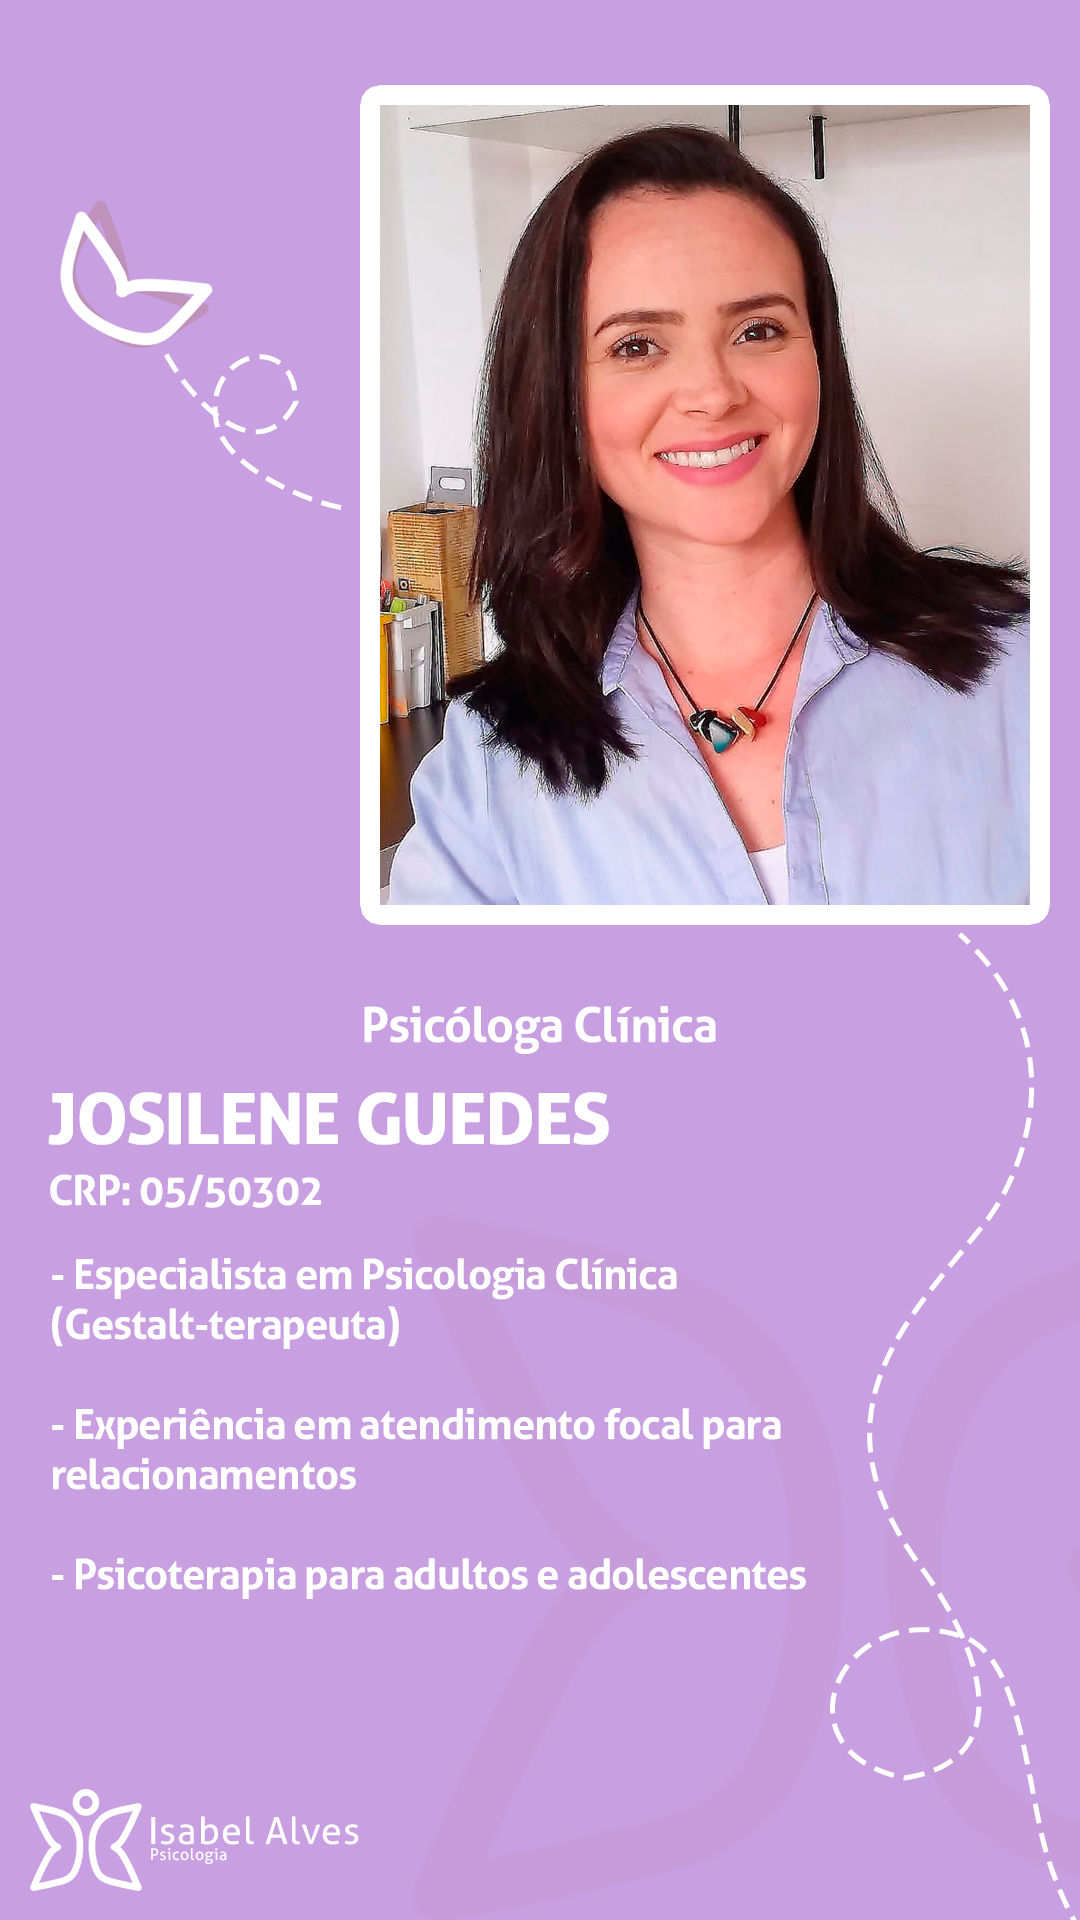 Josilene Guedes